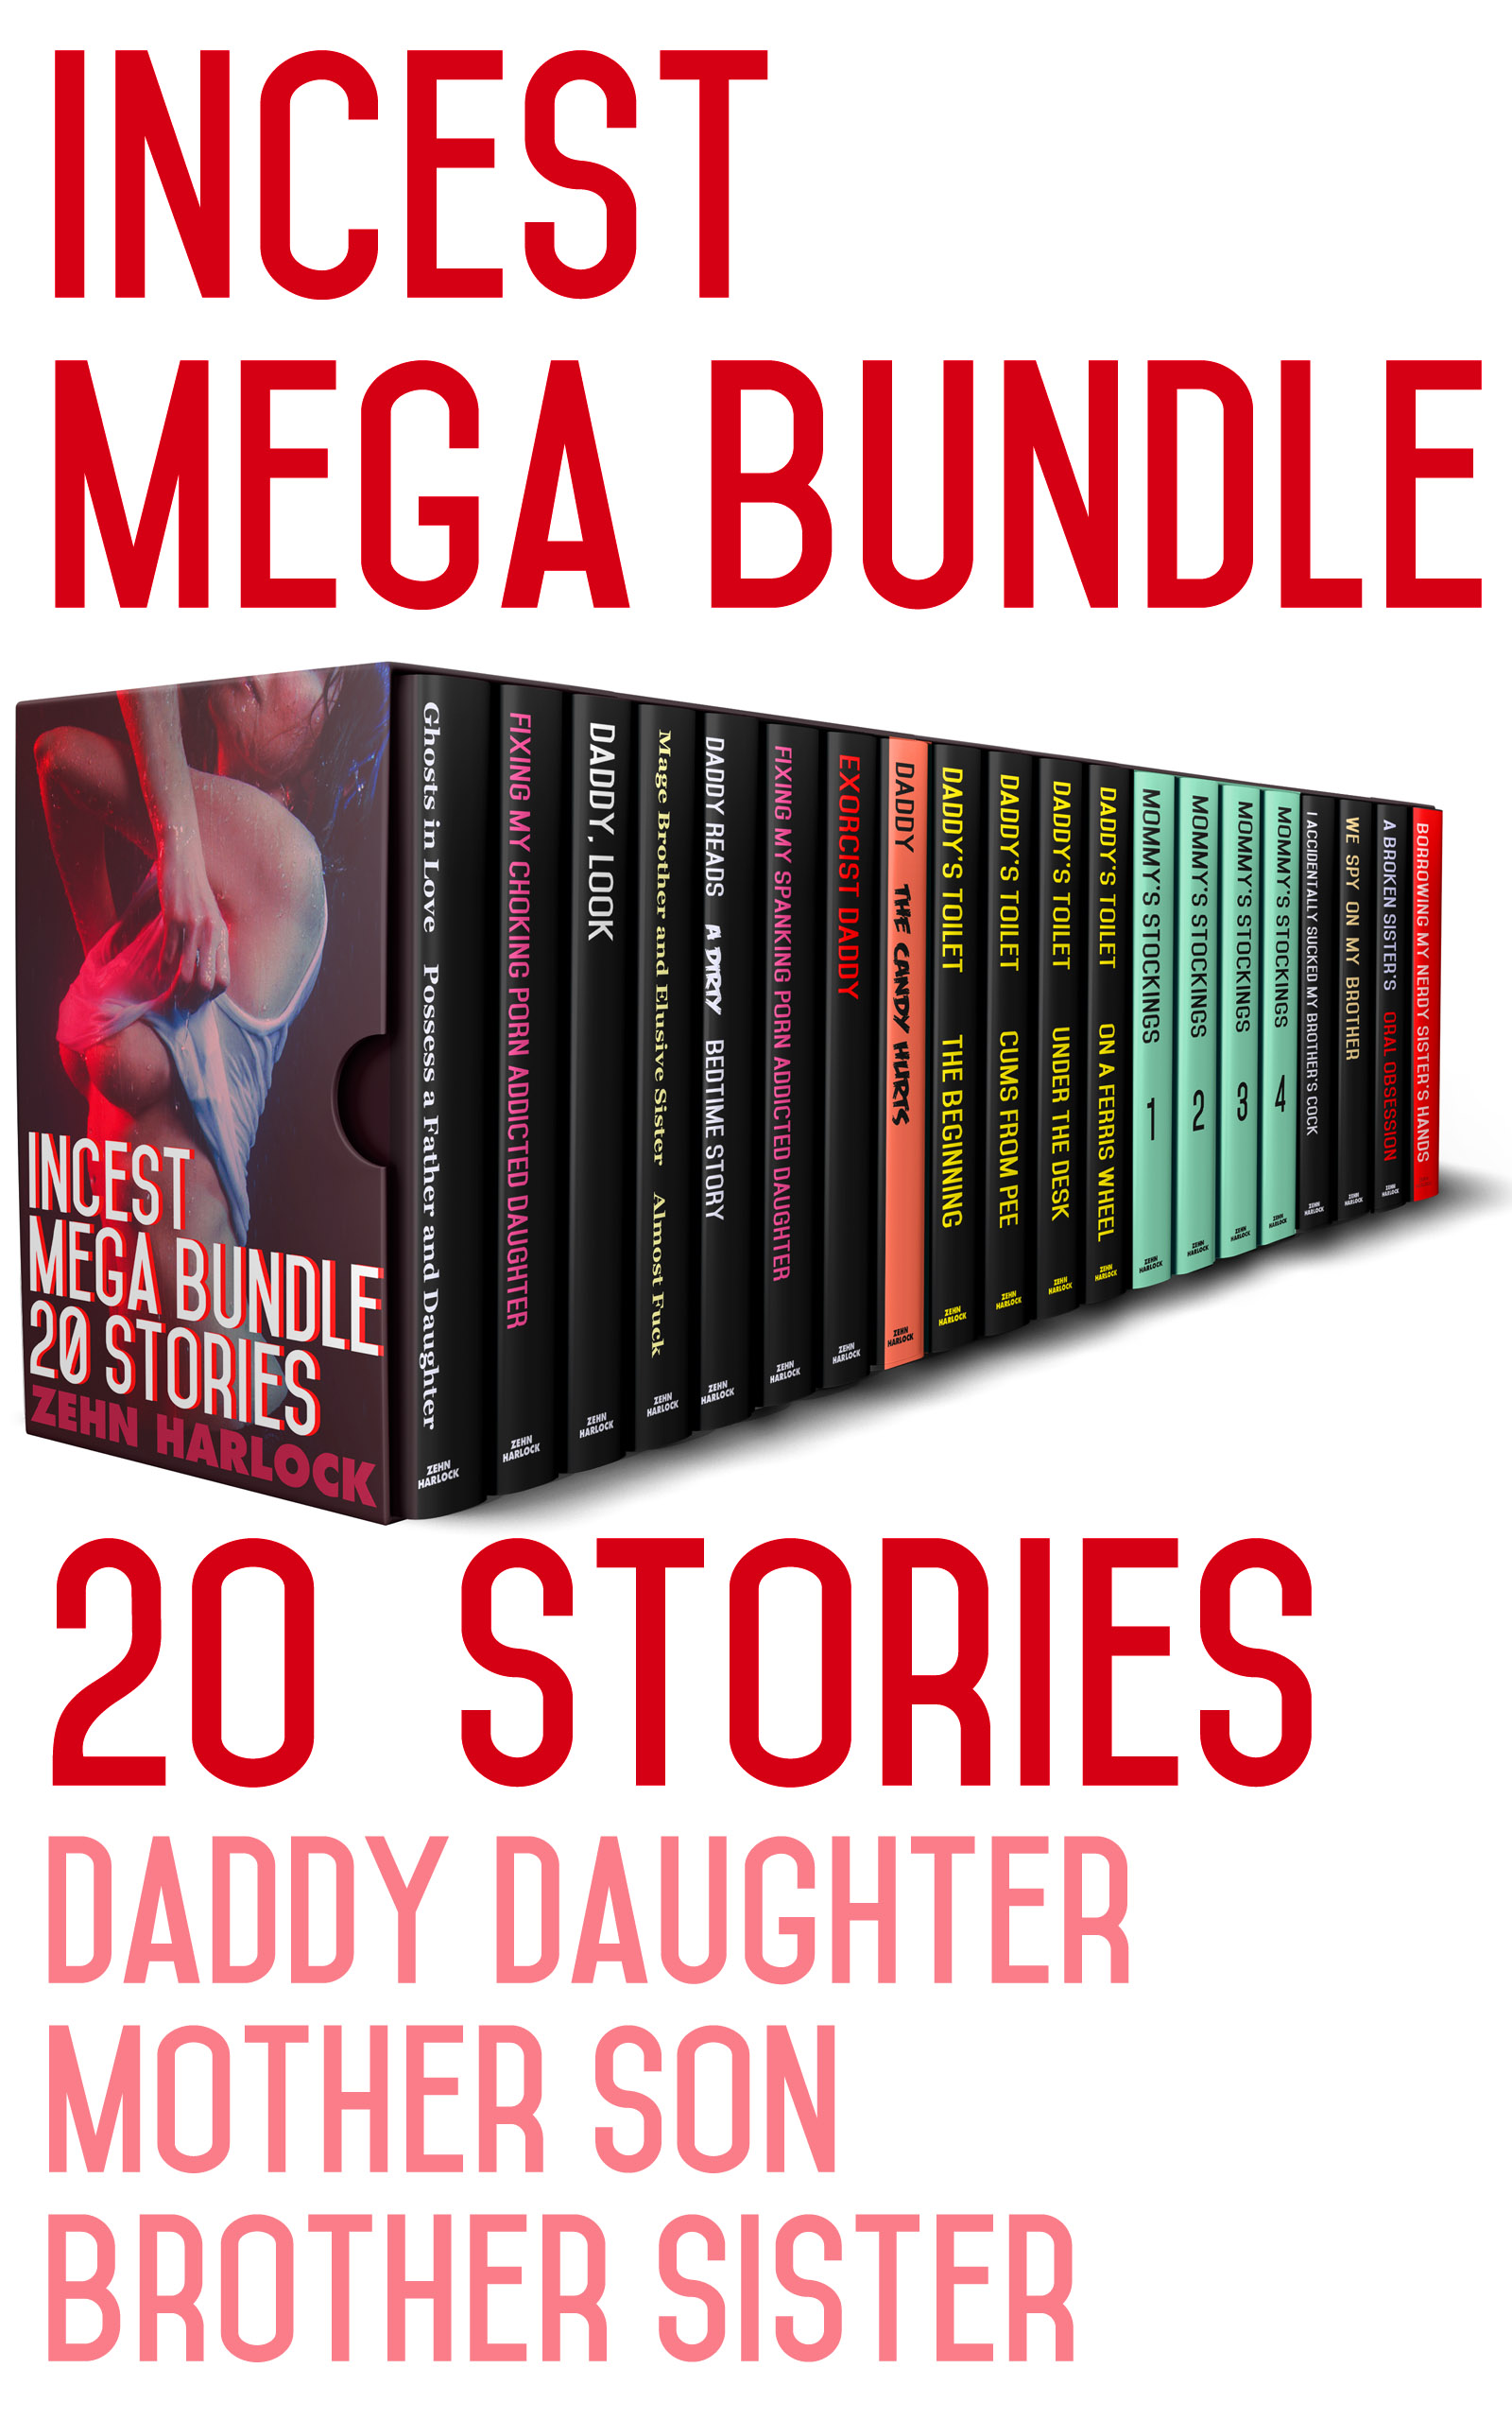 Nerd Brother And Sister Incest Porn - Incest Mega Bundle 20 Stories Daddy Daughter Mother Son Brother Sister, an  Ebook by Zehn Harlock